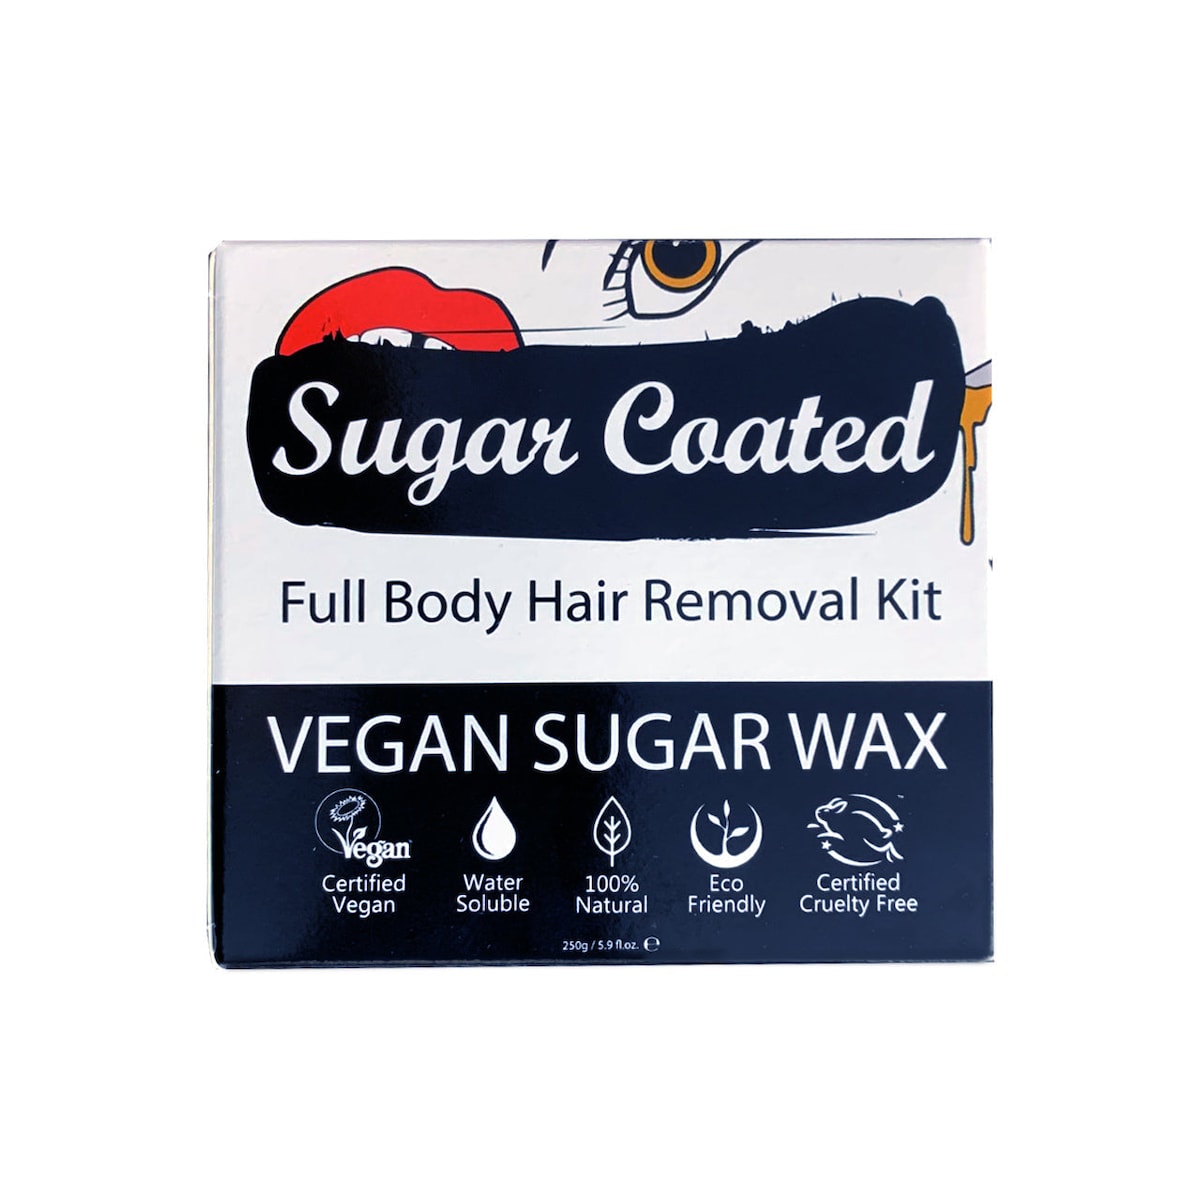 Sugar Coated Full Body Hair Removal Kit 250g